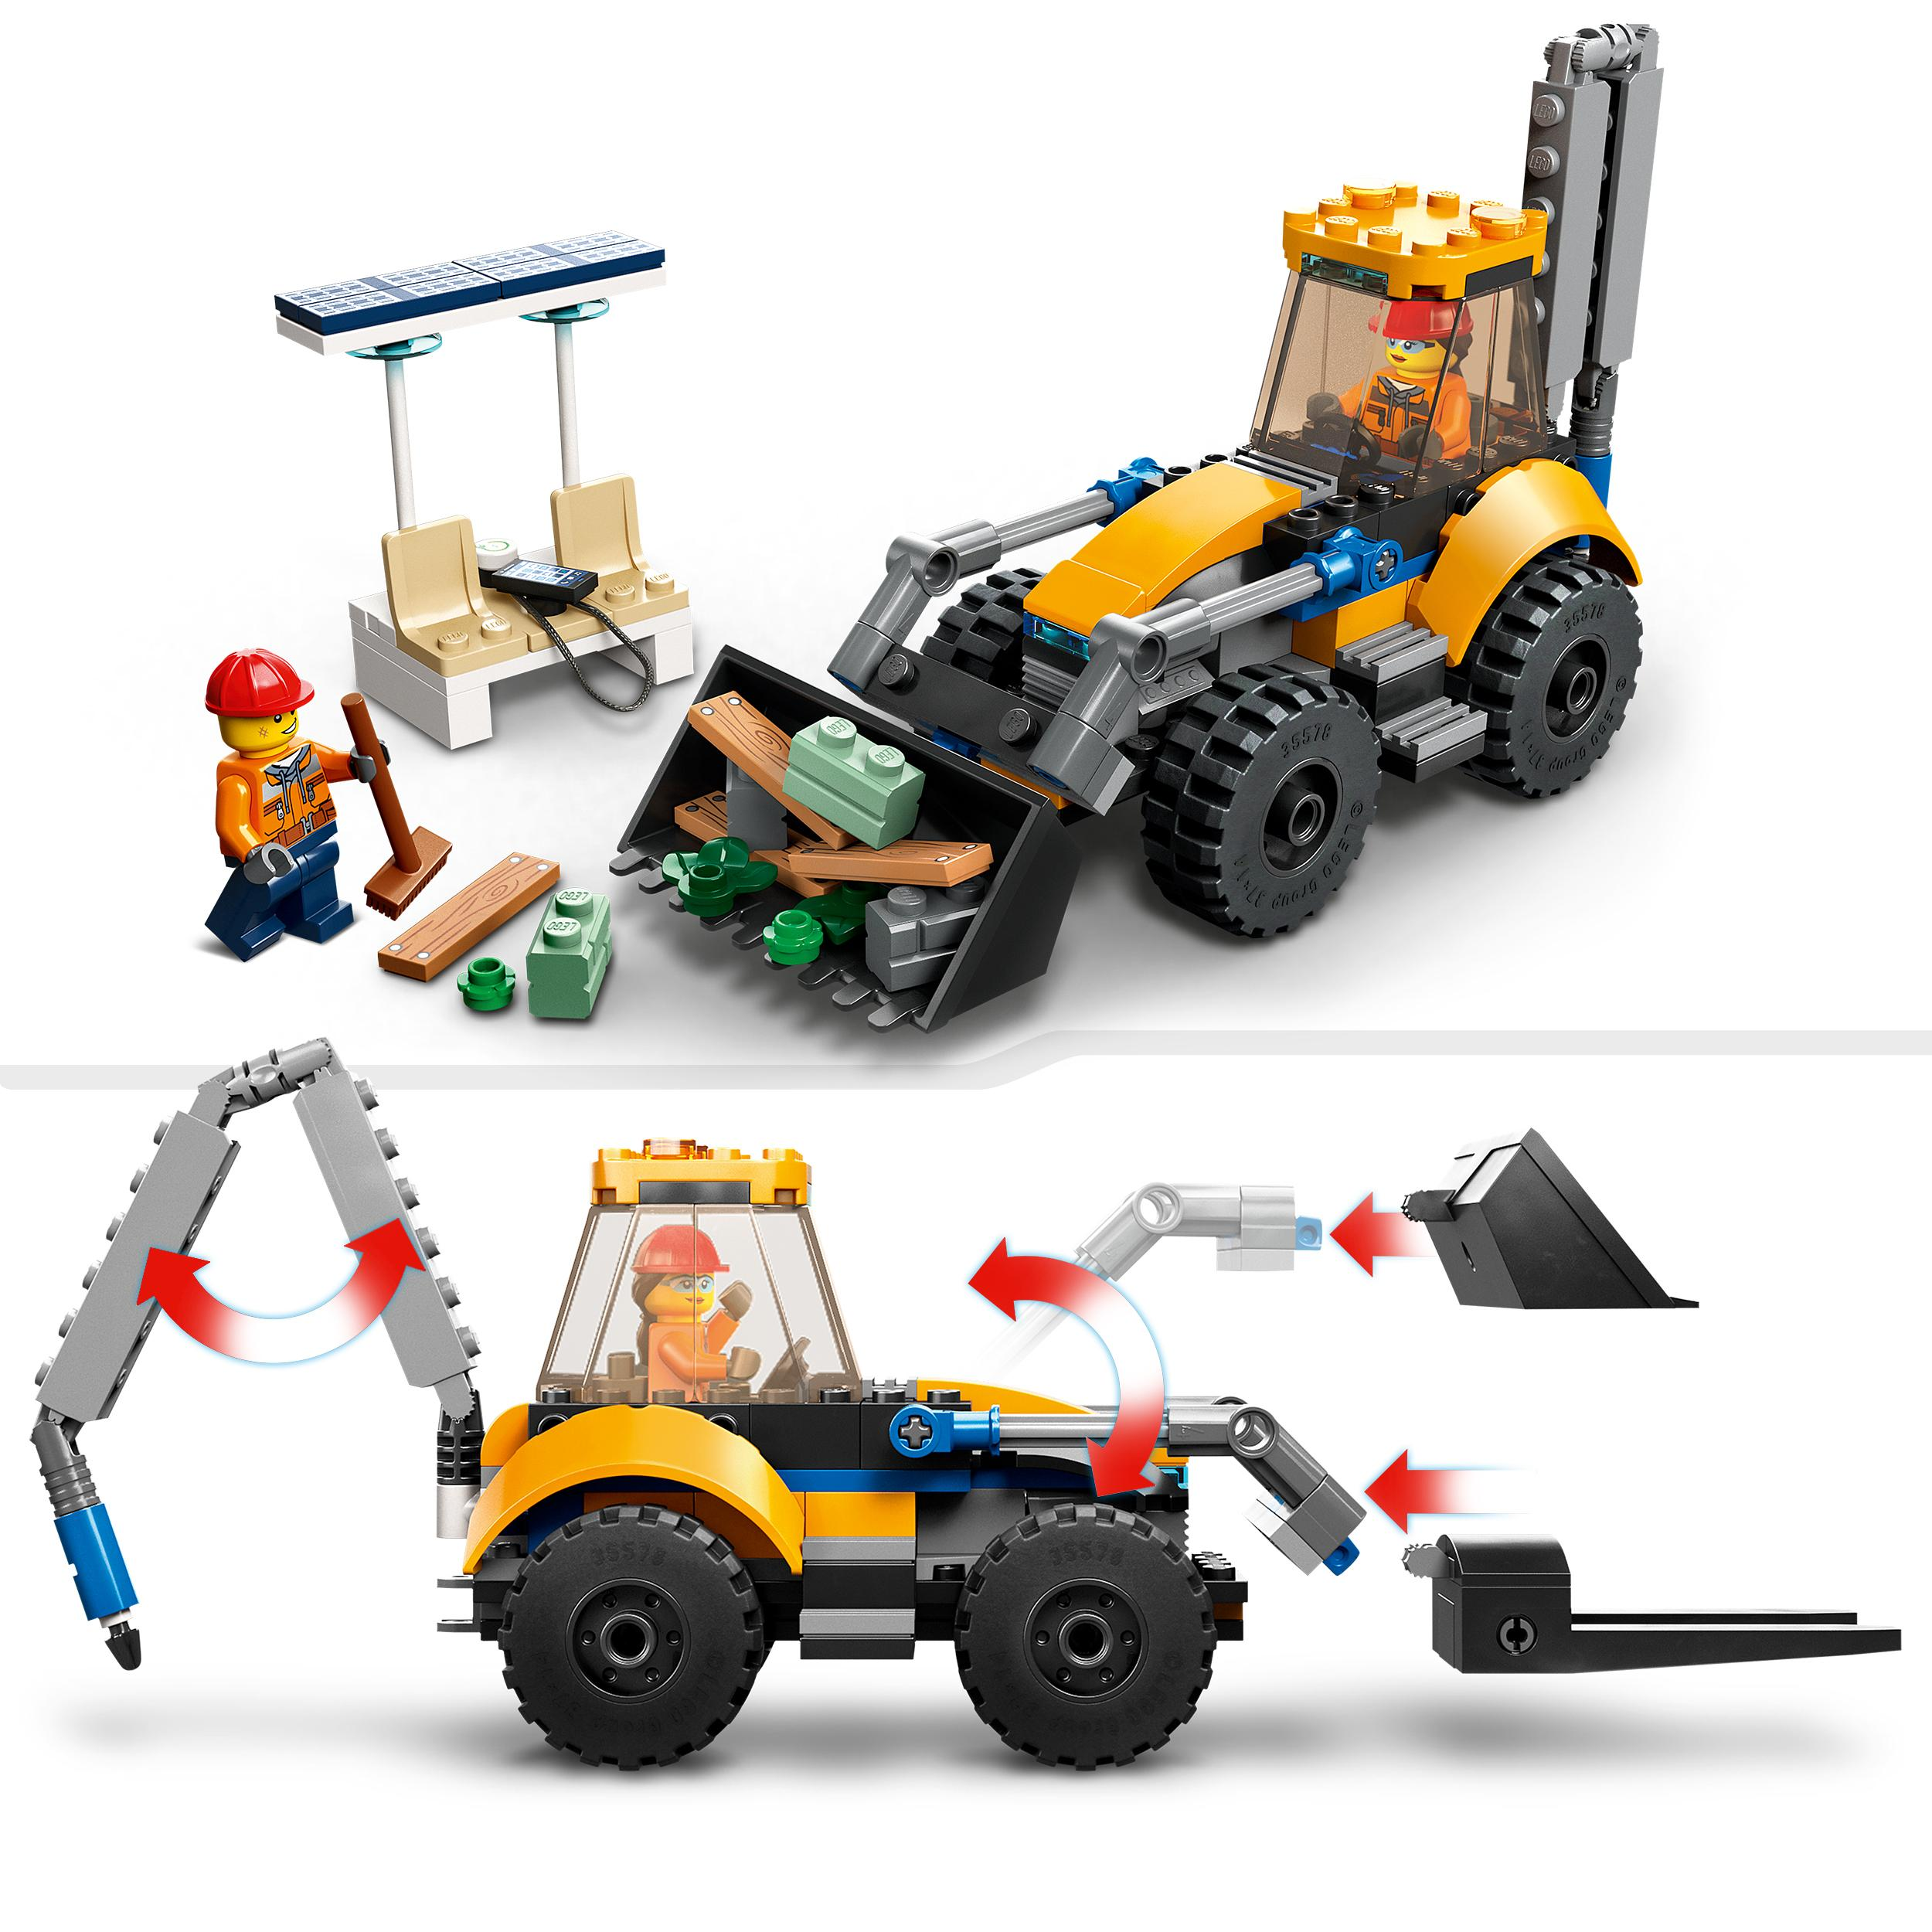 Mehrfarbig Radlader City LEGO 60385 Bausatz,